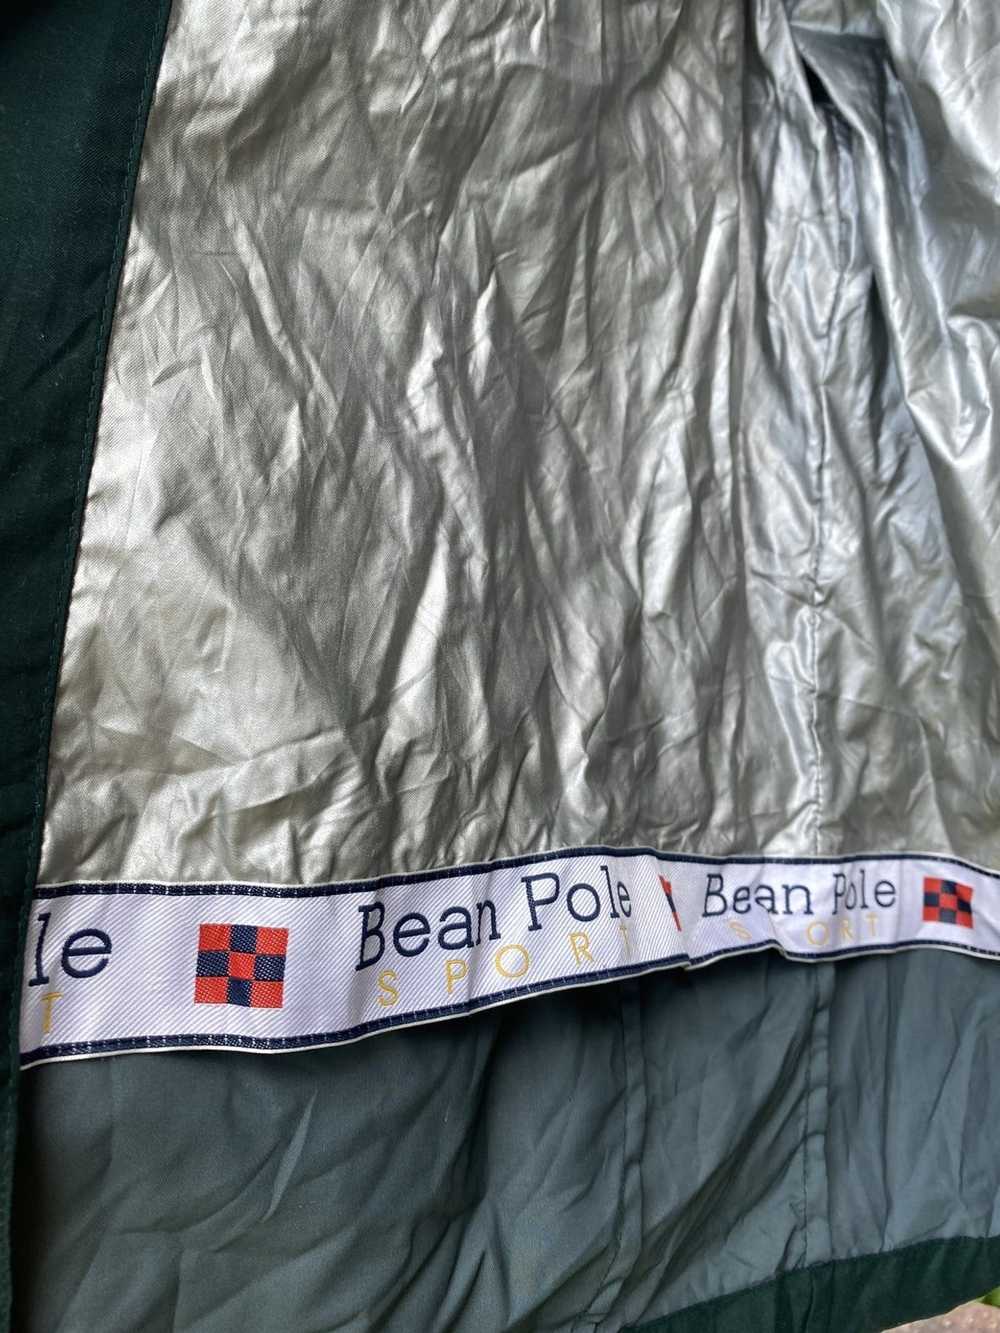 Bean Pole Beam pole hoodie jacket - image 5